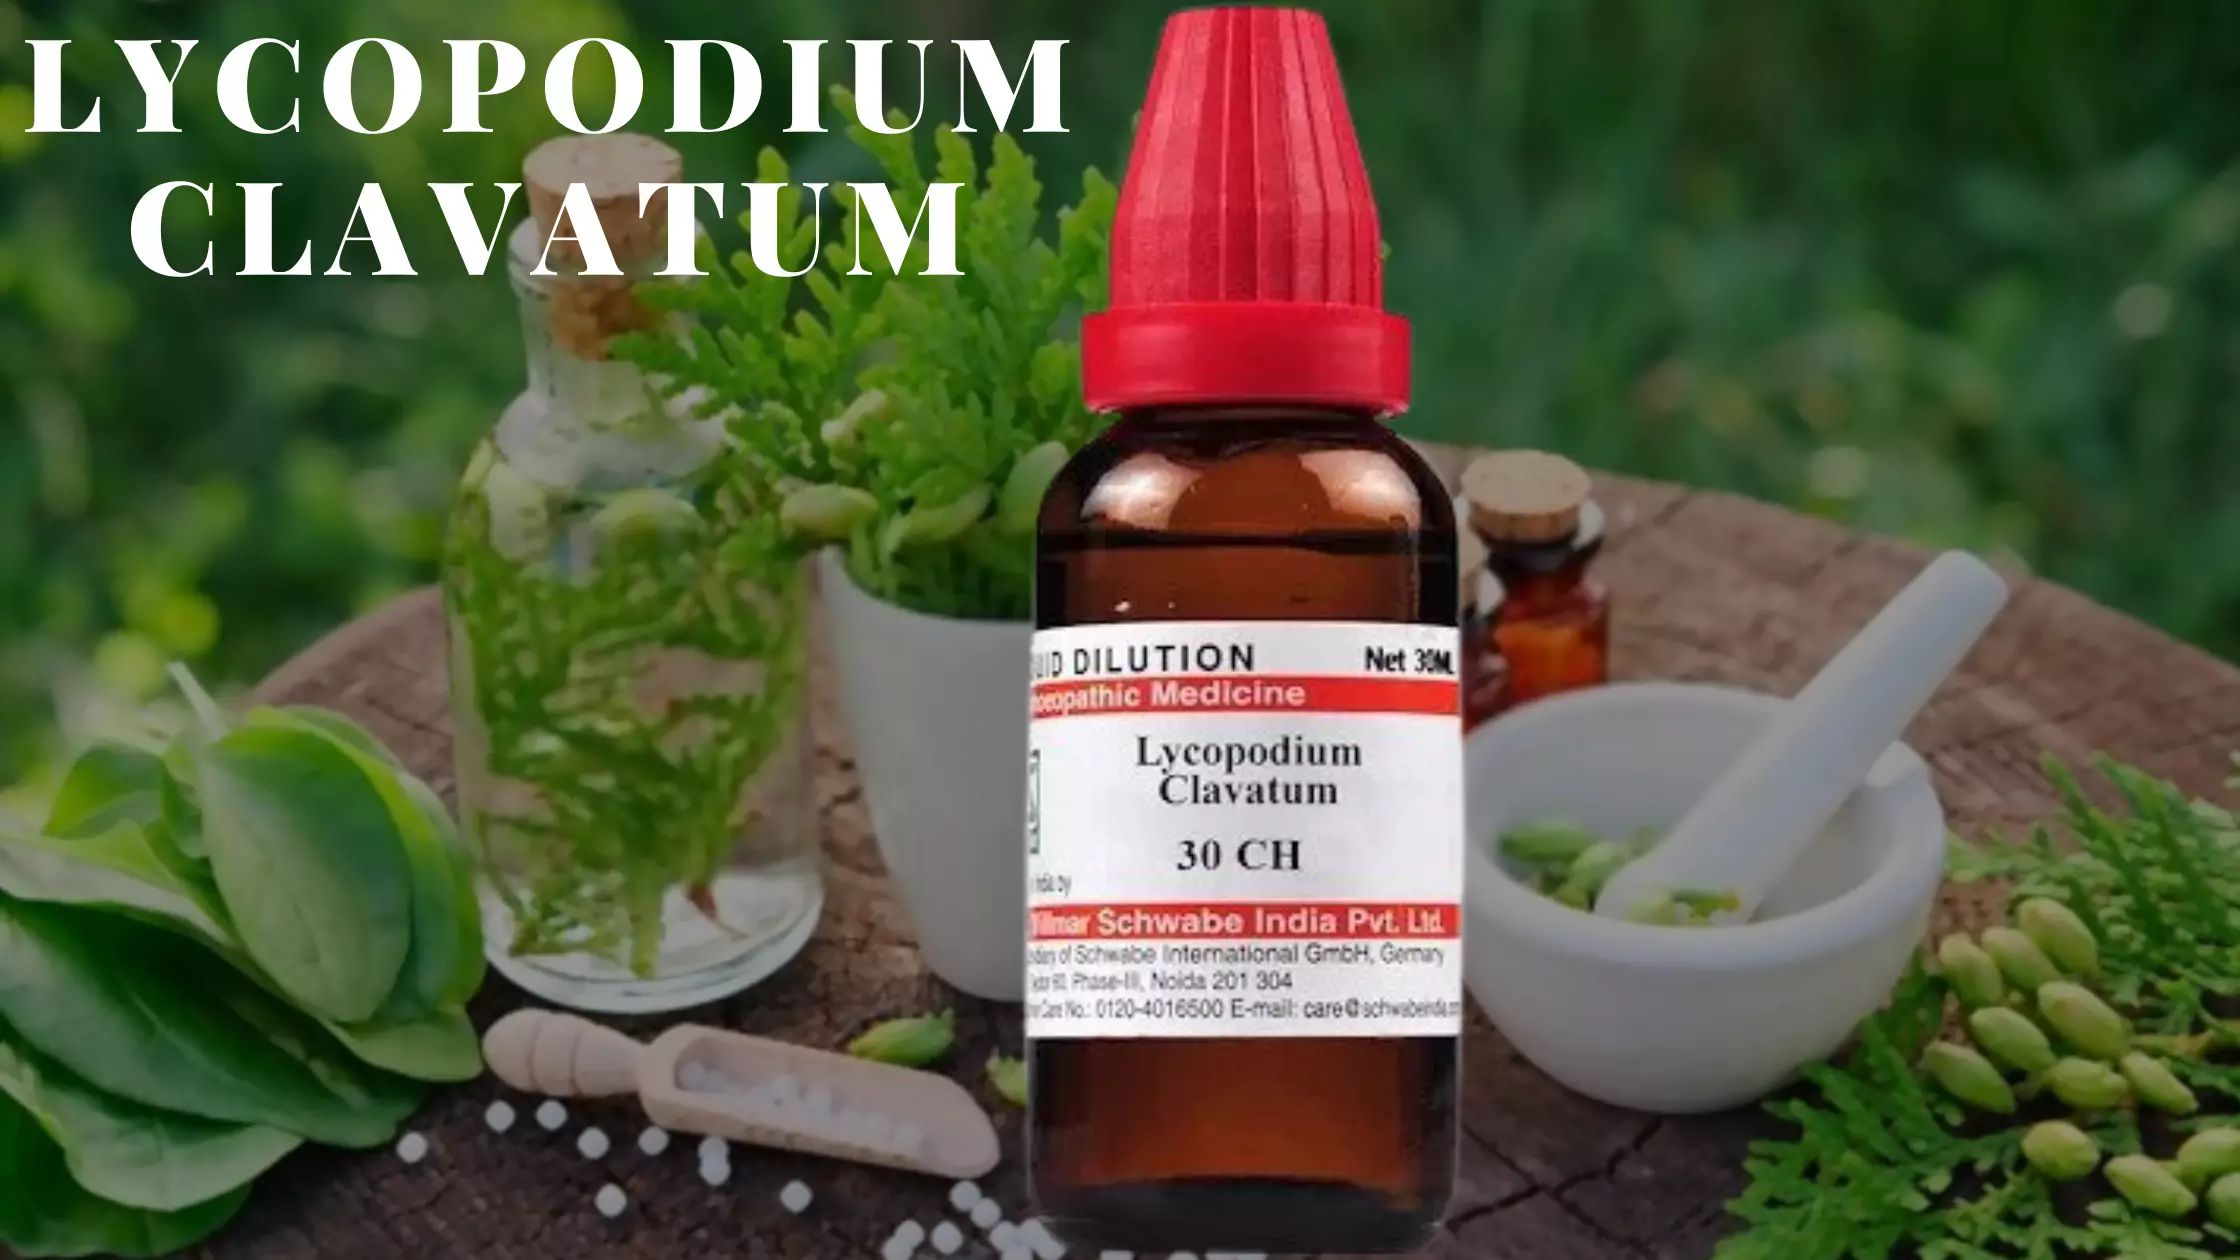 Lycopodium Clavatum 30, 200, 1M: Uses, Dosage & Benefits - Dr. Pranjali